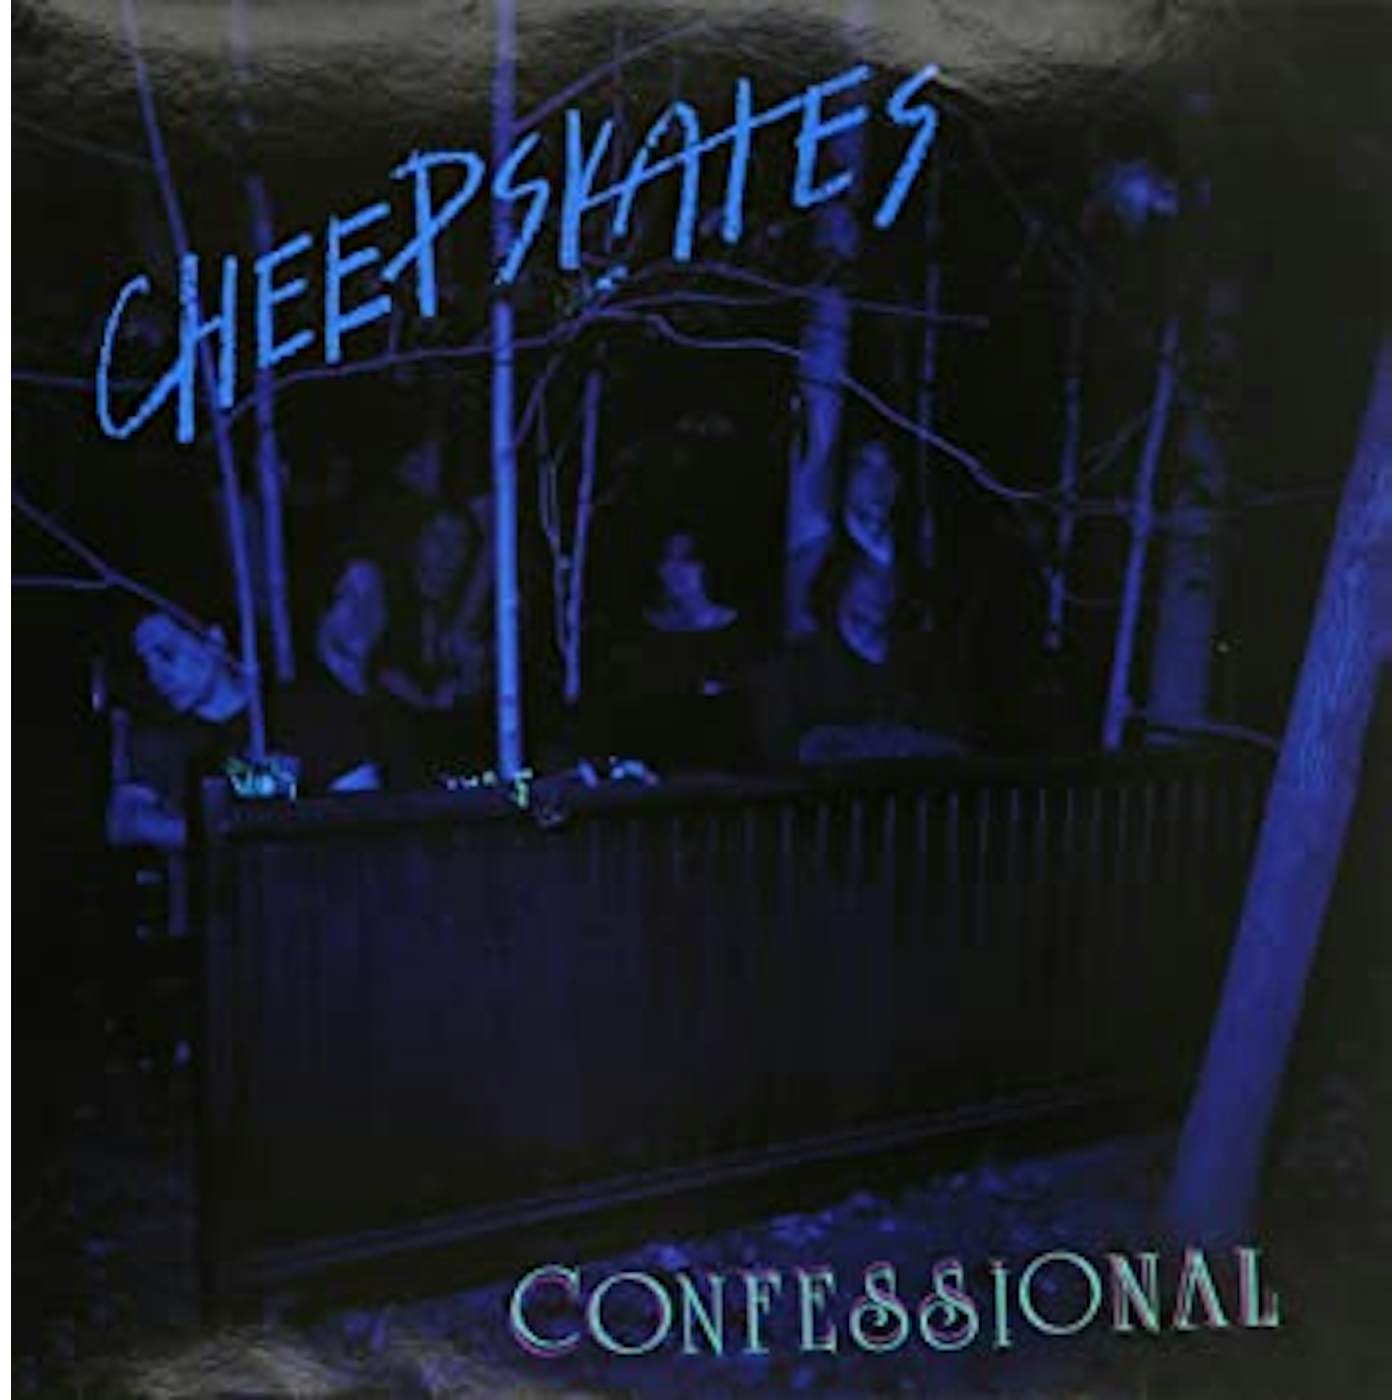 Cheepskates CONFESSIONAL (Vinyl)